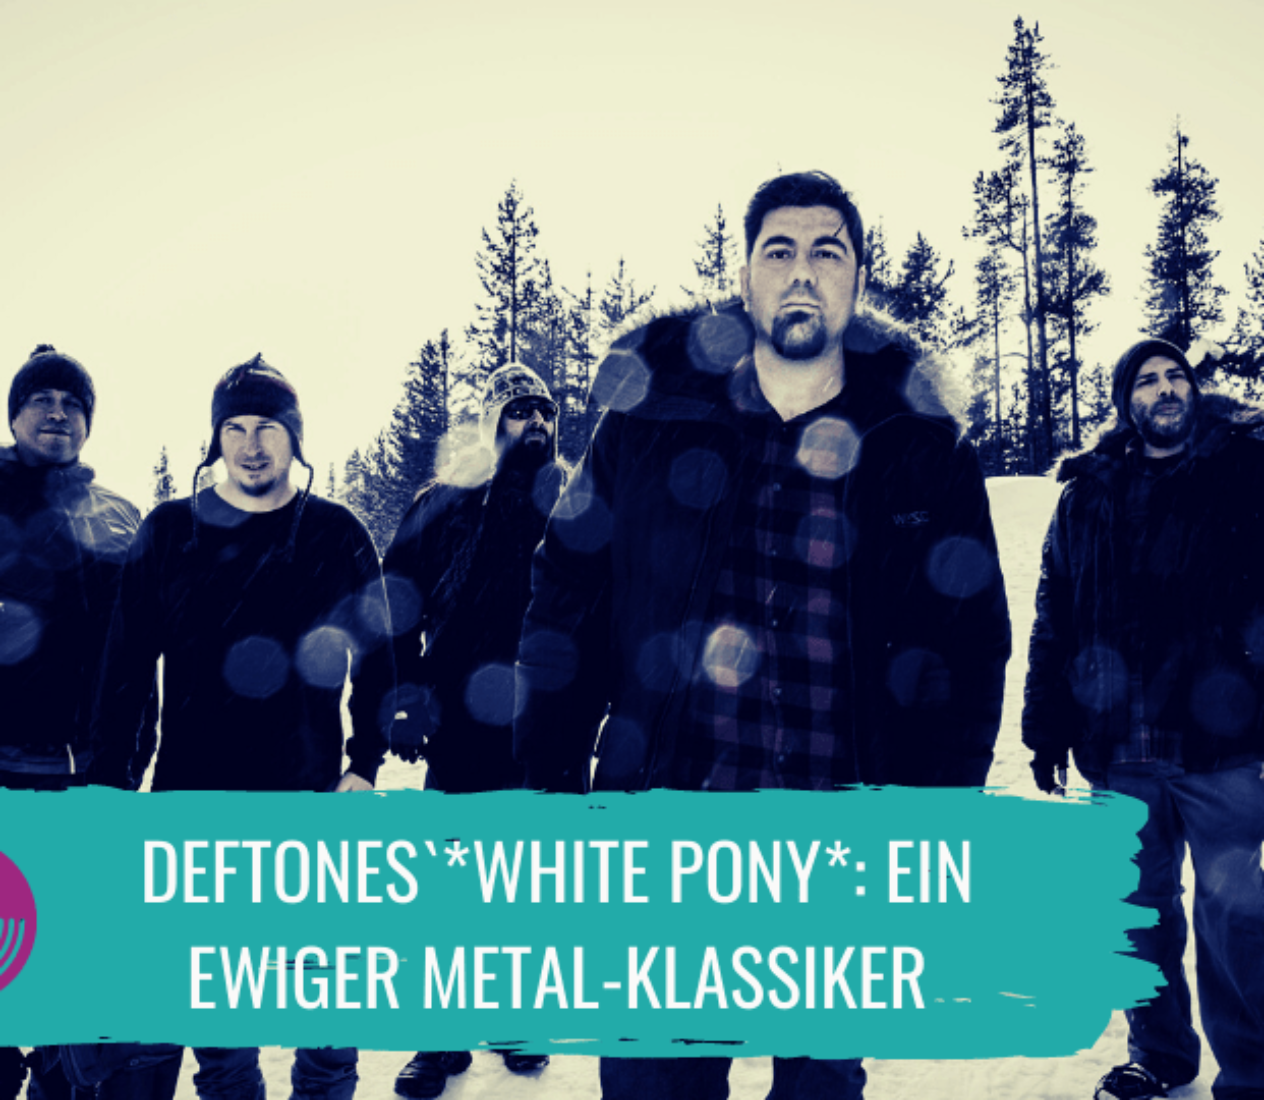 Albumvorstellung: Deftones – *White Pony*